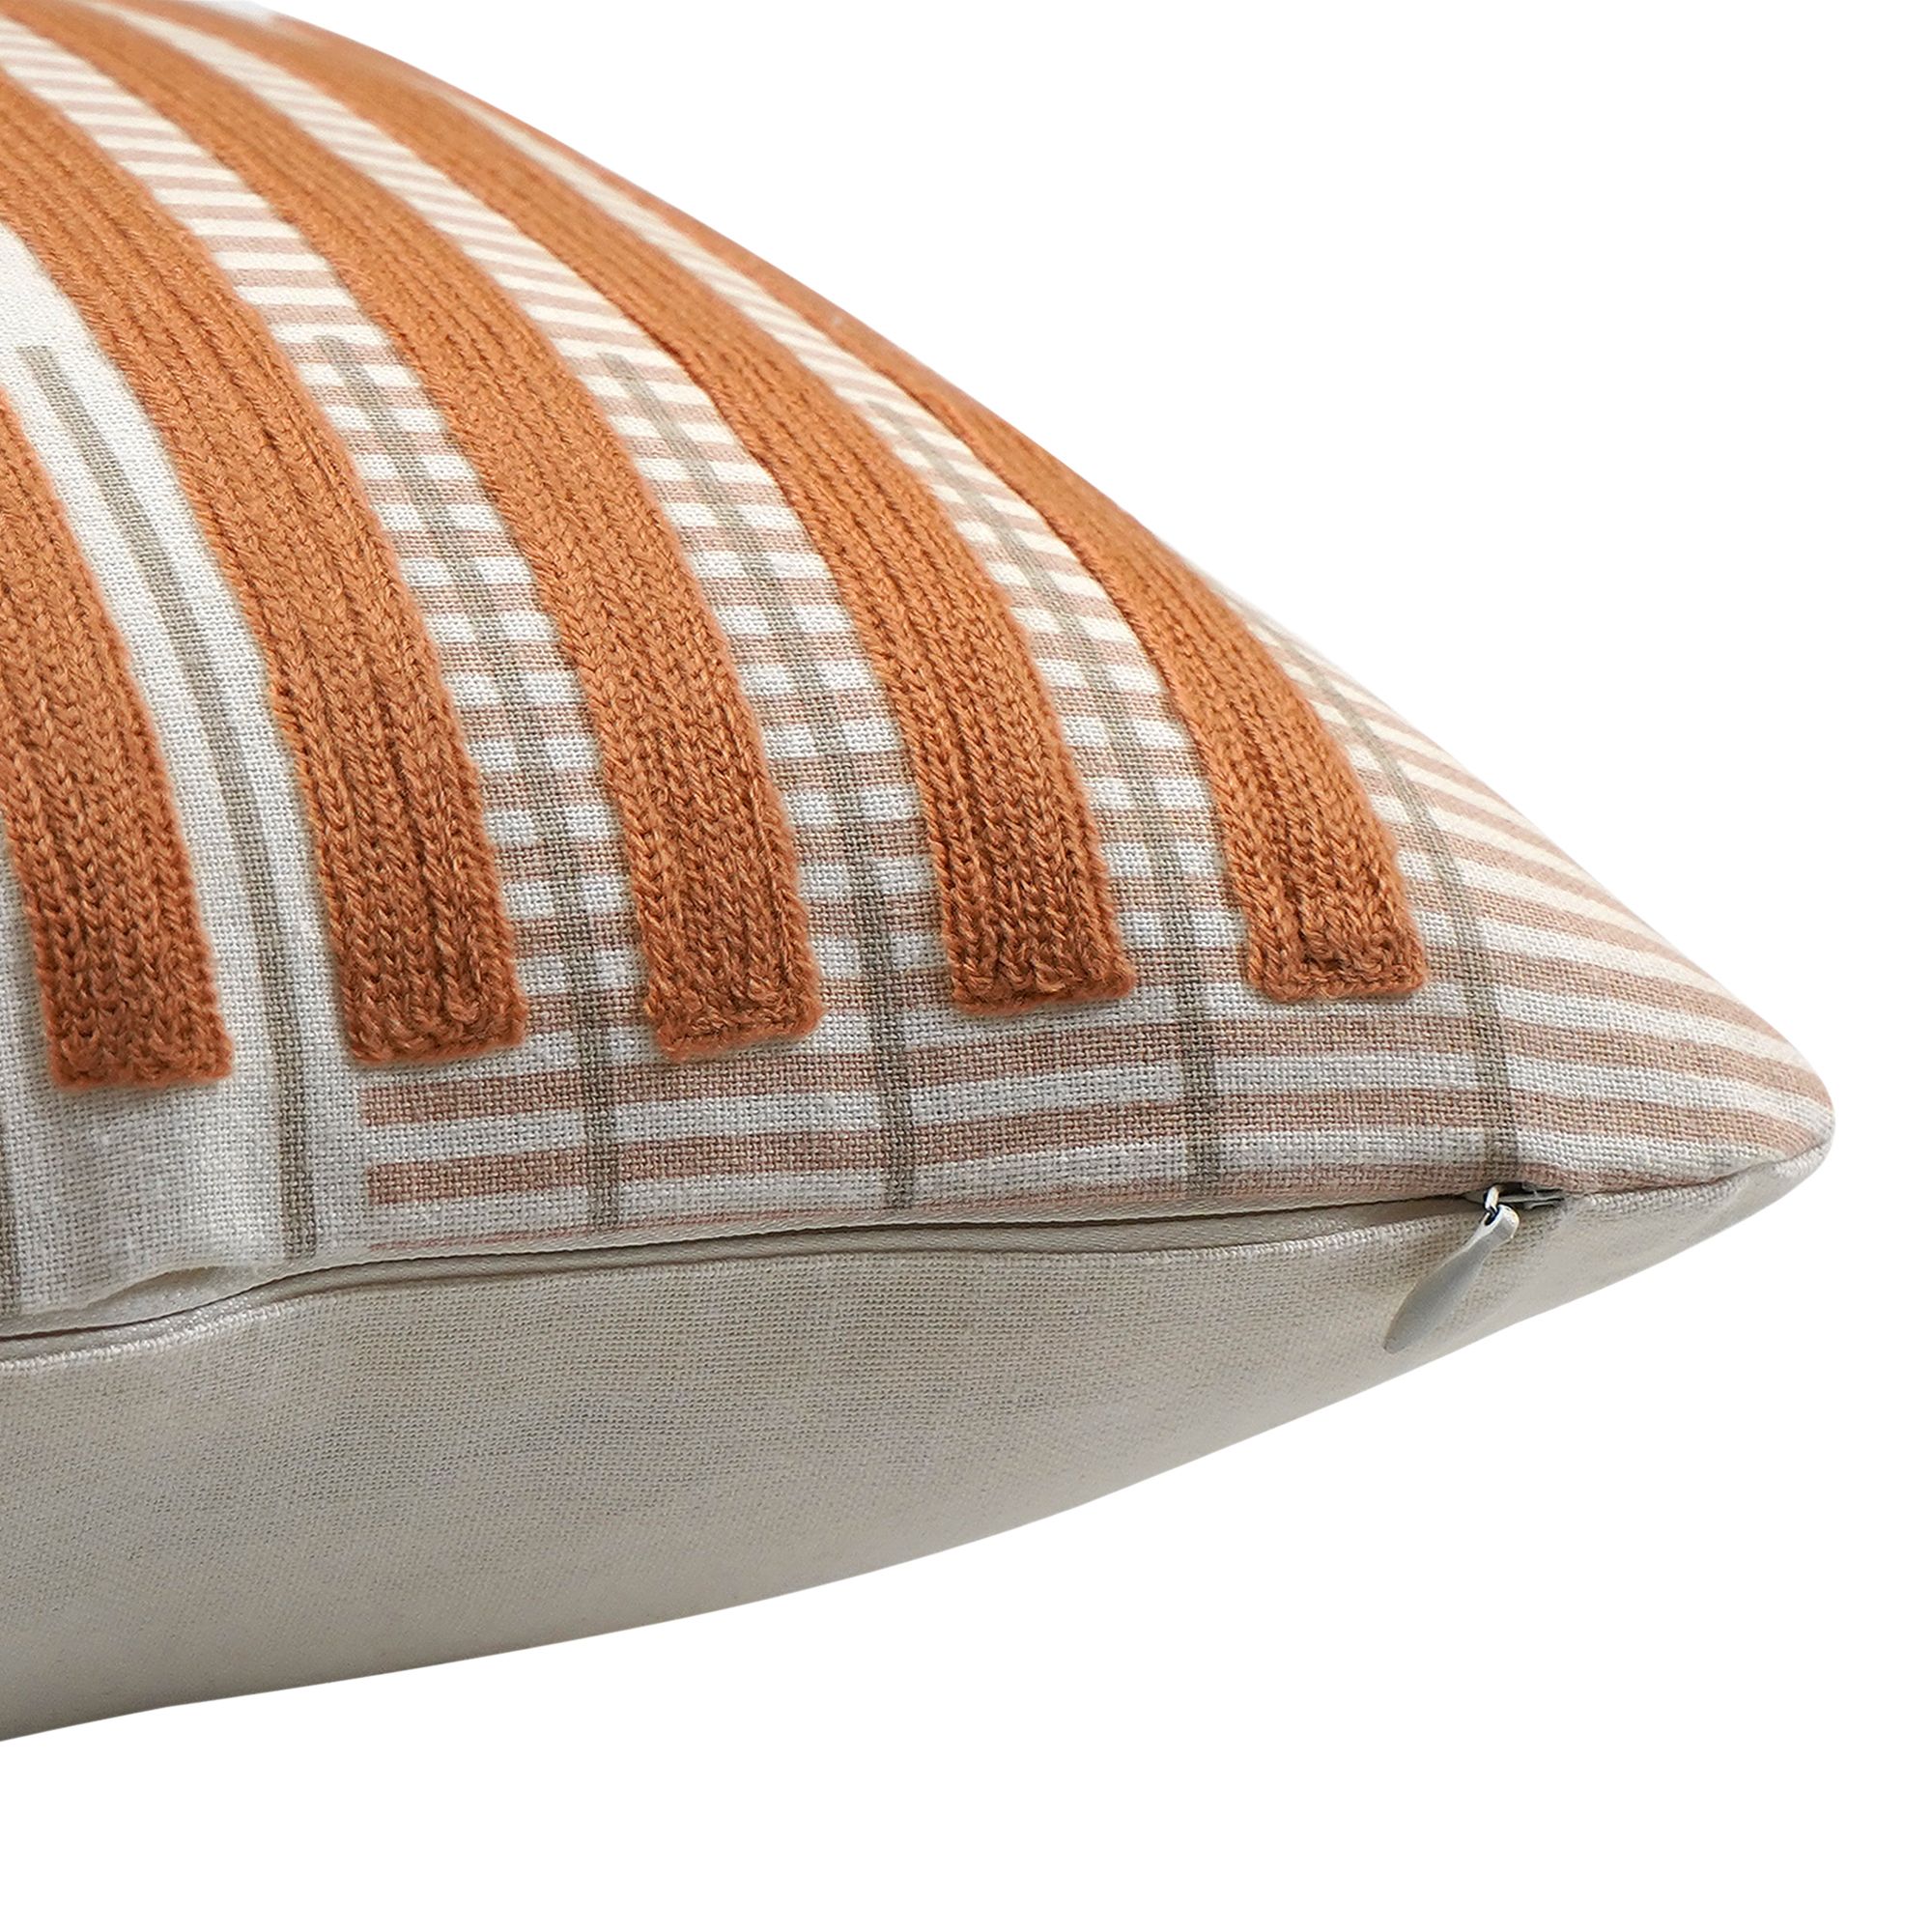 GoodHome Kisiria Orange & Beige Embroidery Outdoor Cushion (L)50cm x (W)30cm